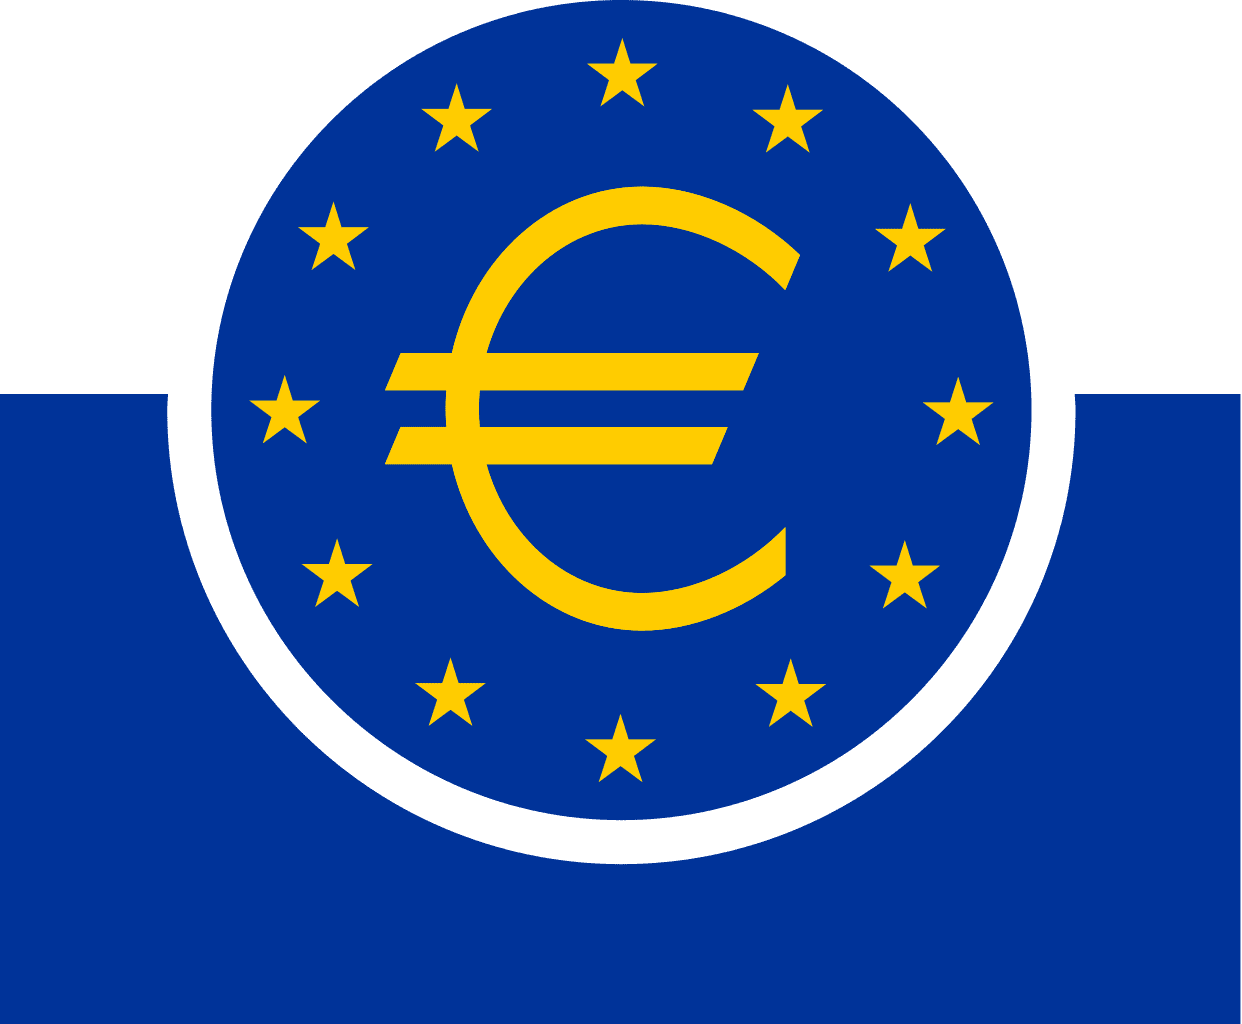 logo ECB